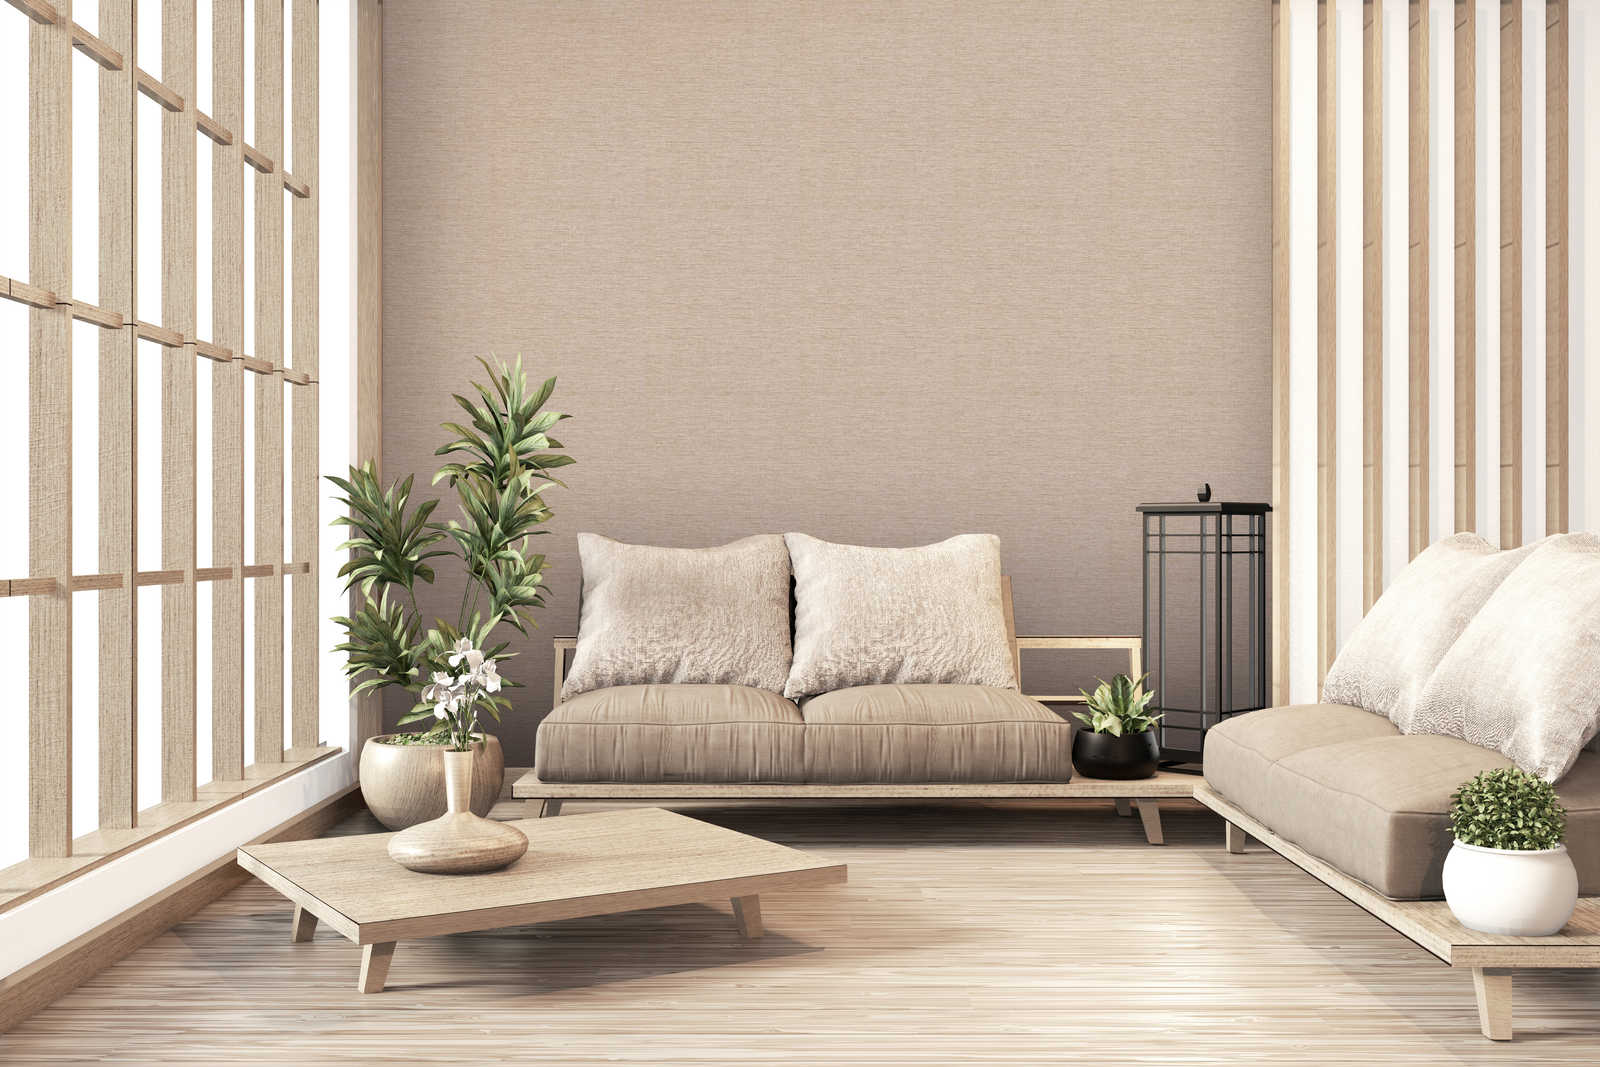             Plain wallpaper with embossed pattern - beige, metallic
        